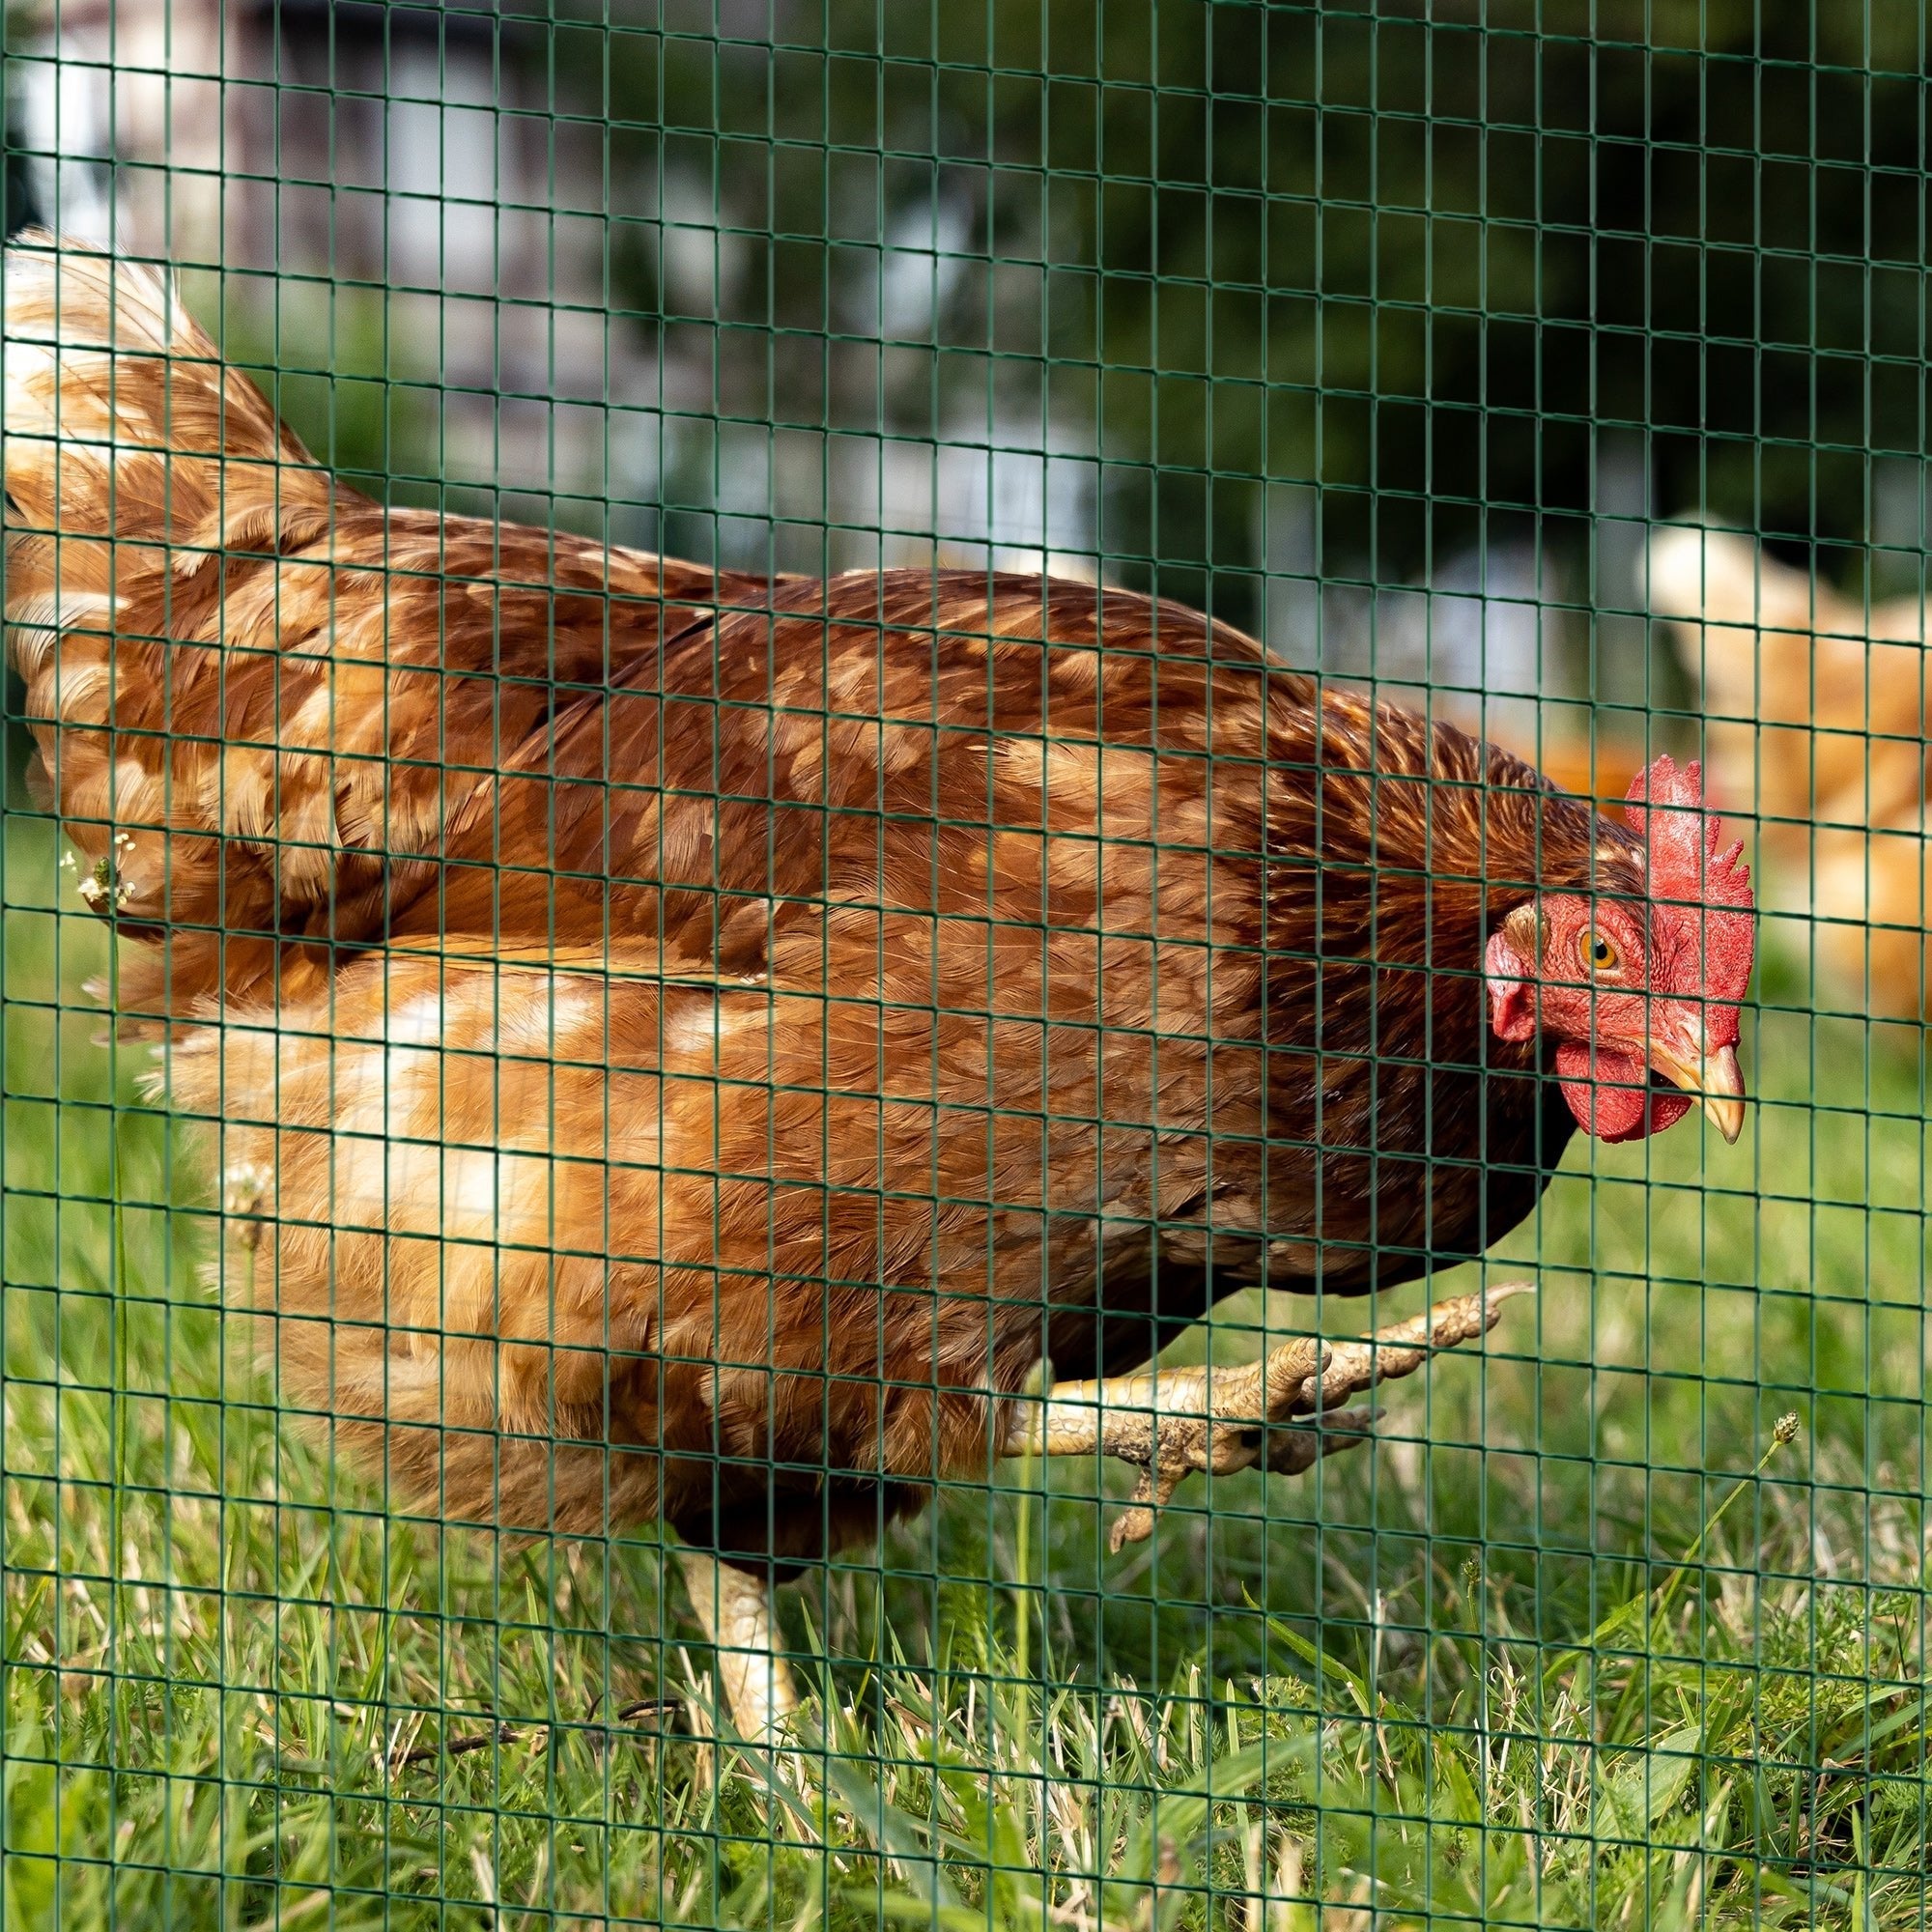 30m PVC Coated Wire Mesh Fencing for Poultry & Pet Enclosures, PawHut,